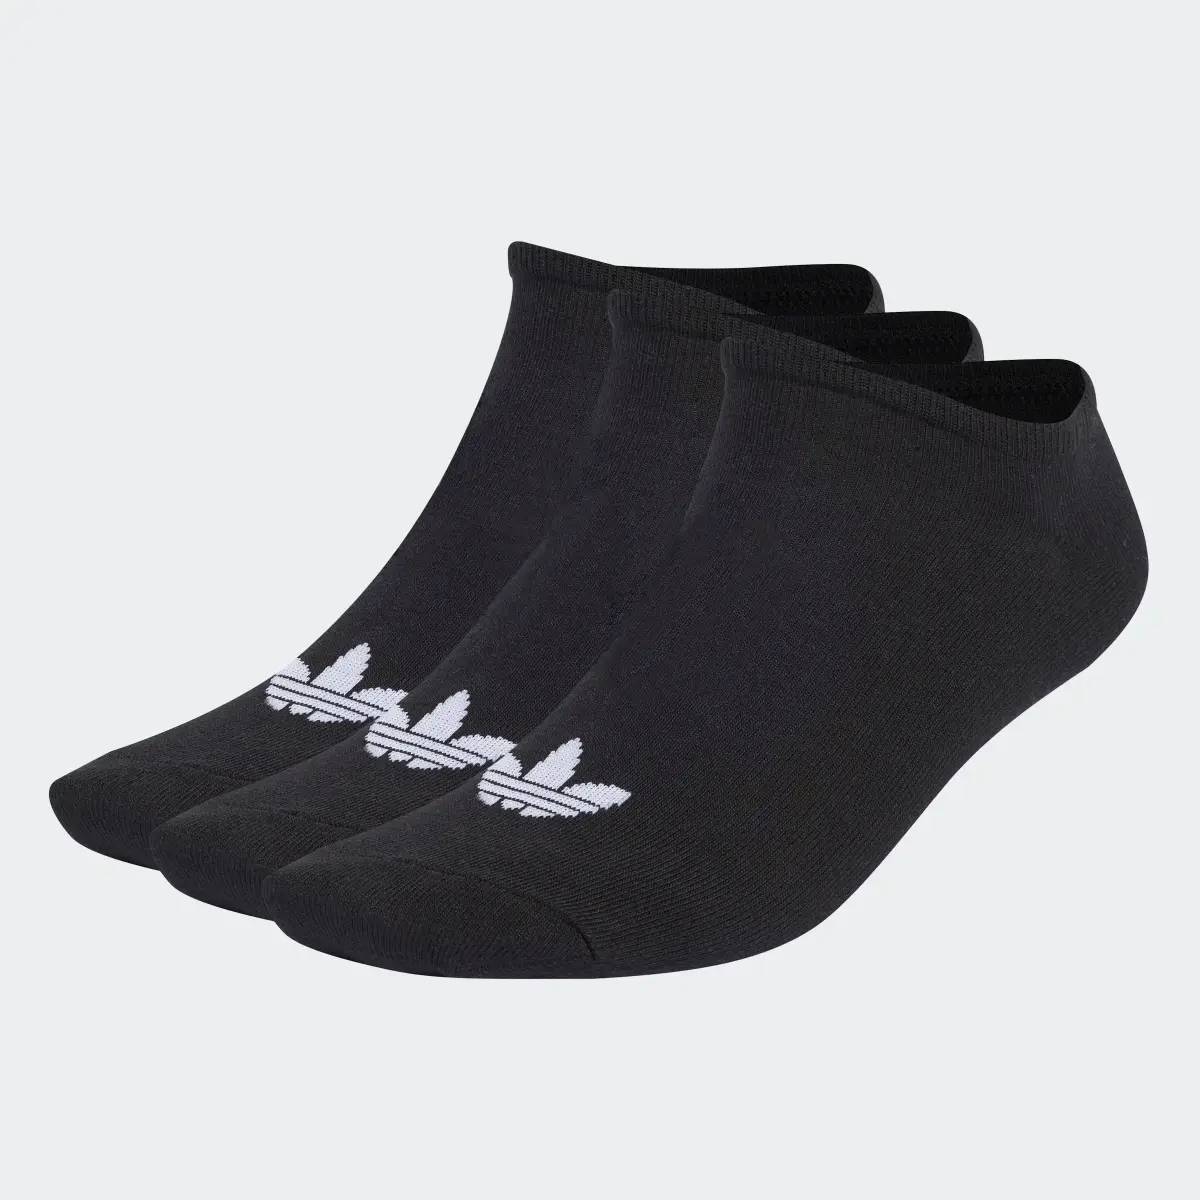 Adidas Socquettes Trefoil Liner (6 paires). 2